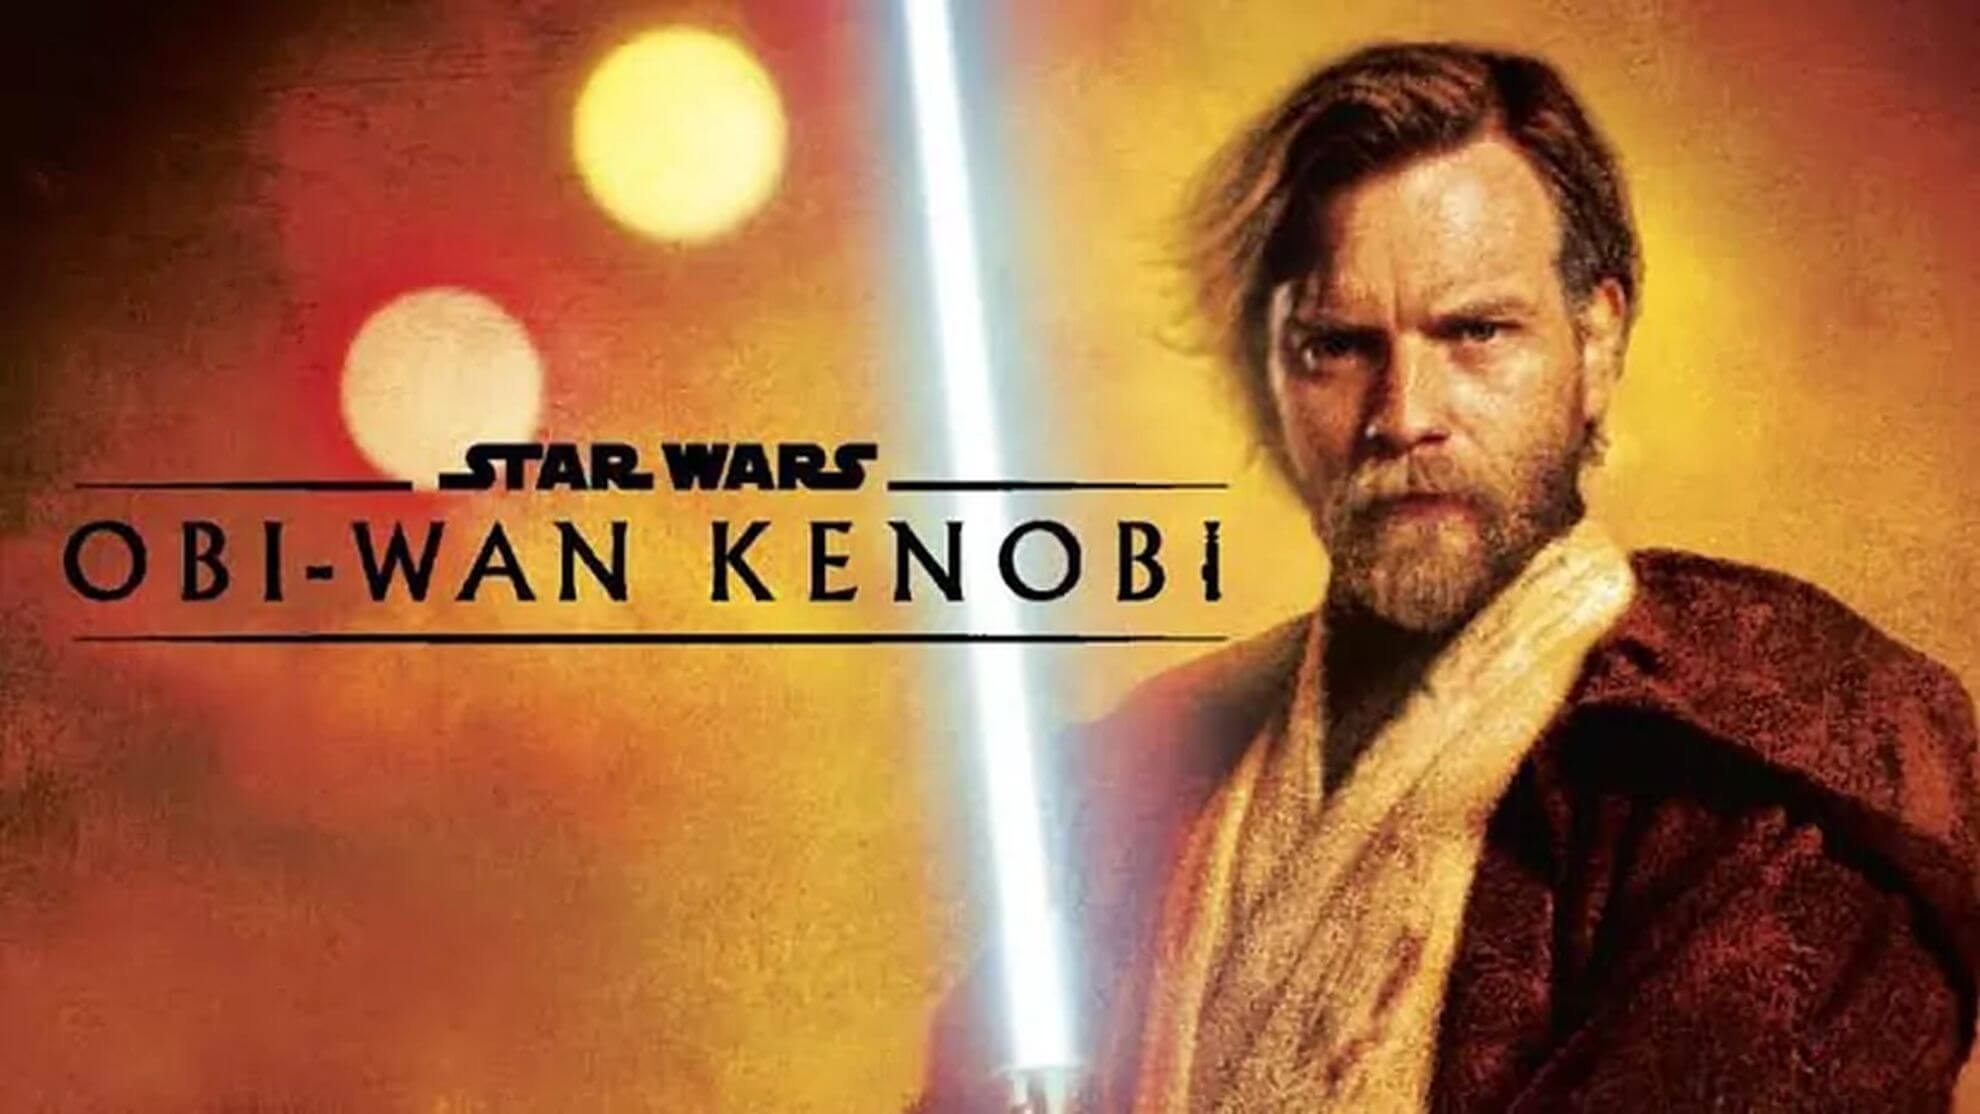 Obi-Wan Kenobi limited series on Disney+.